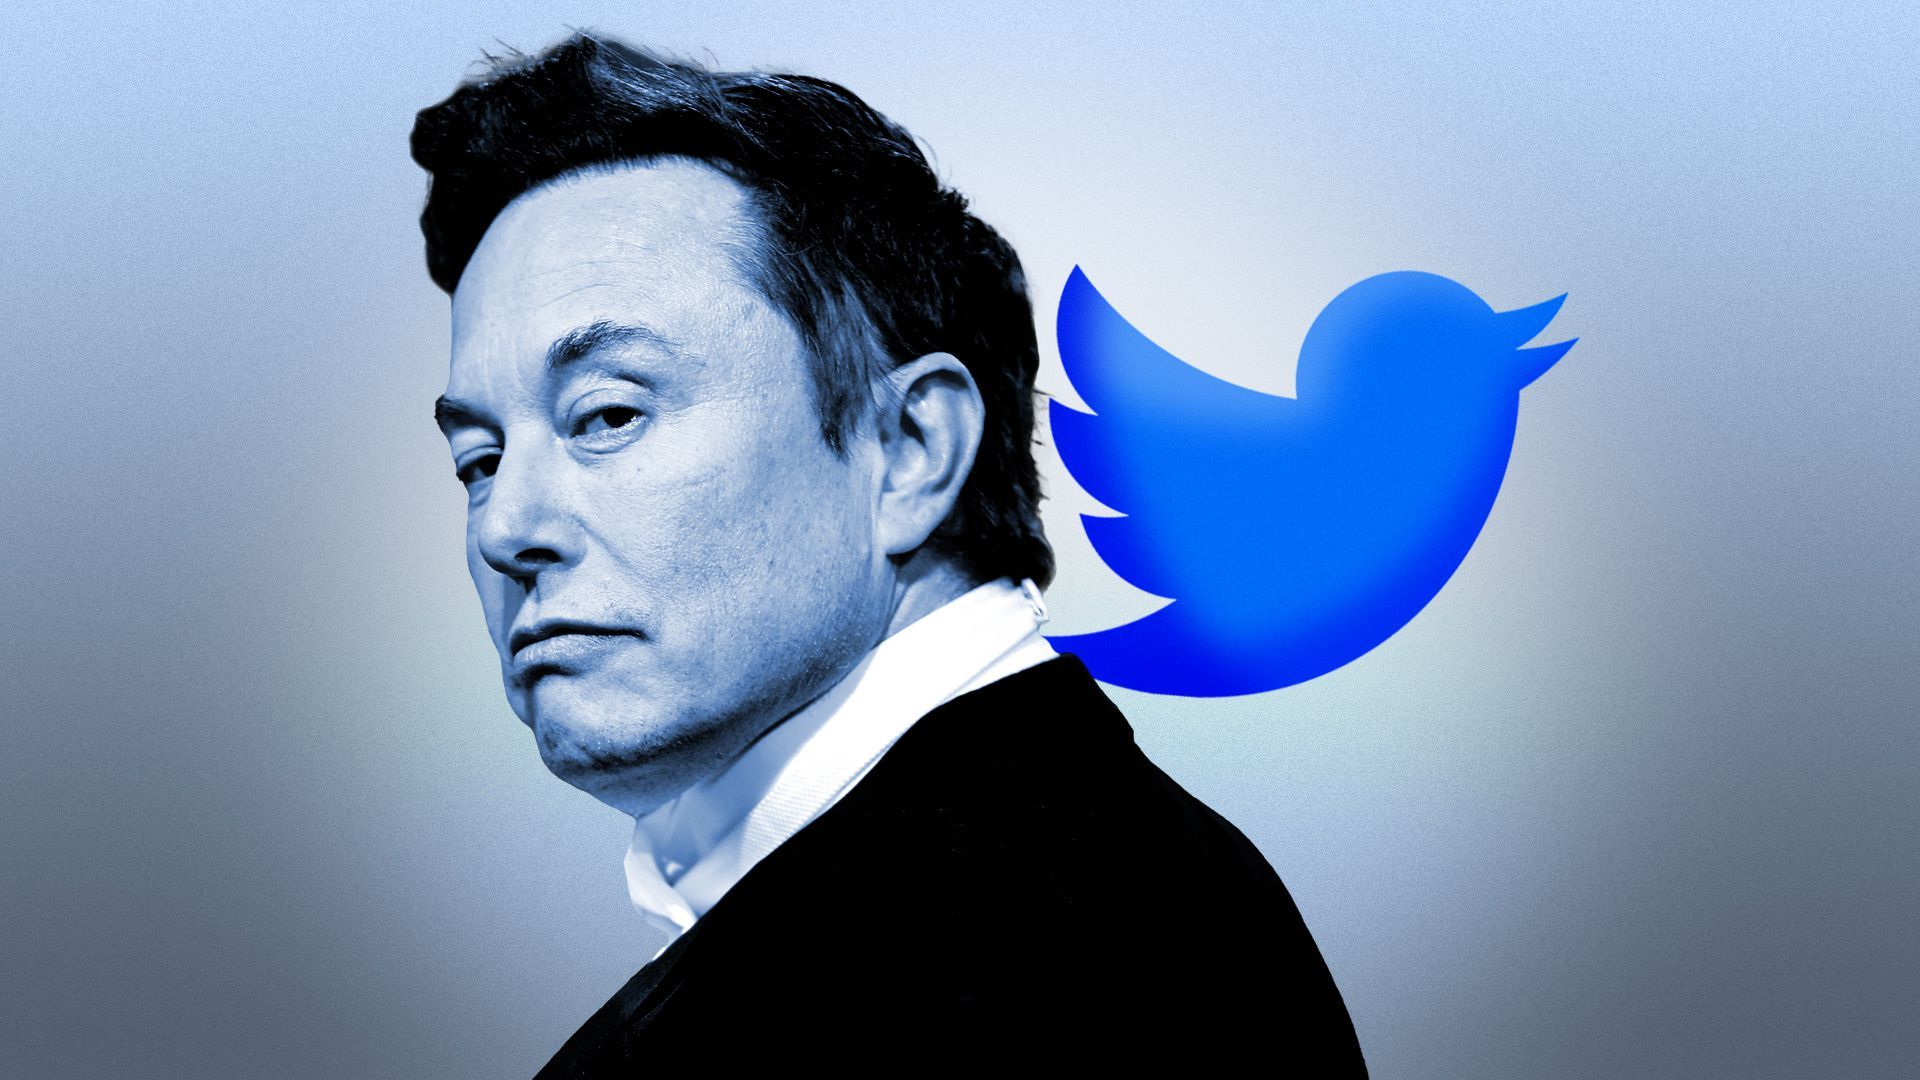 Photo illustration of Elon Musk next to the twitter logo